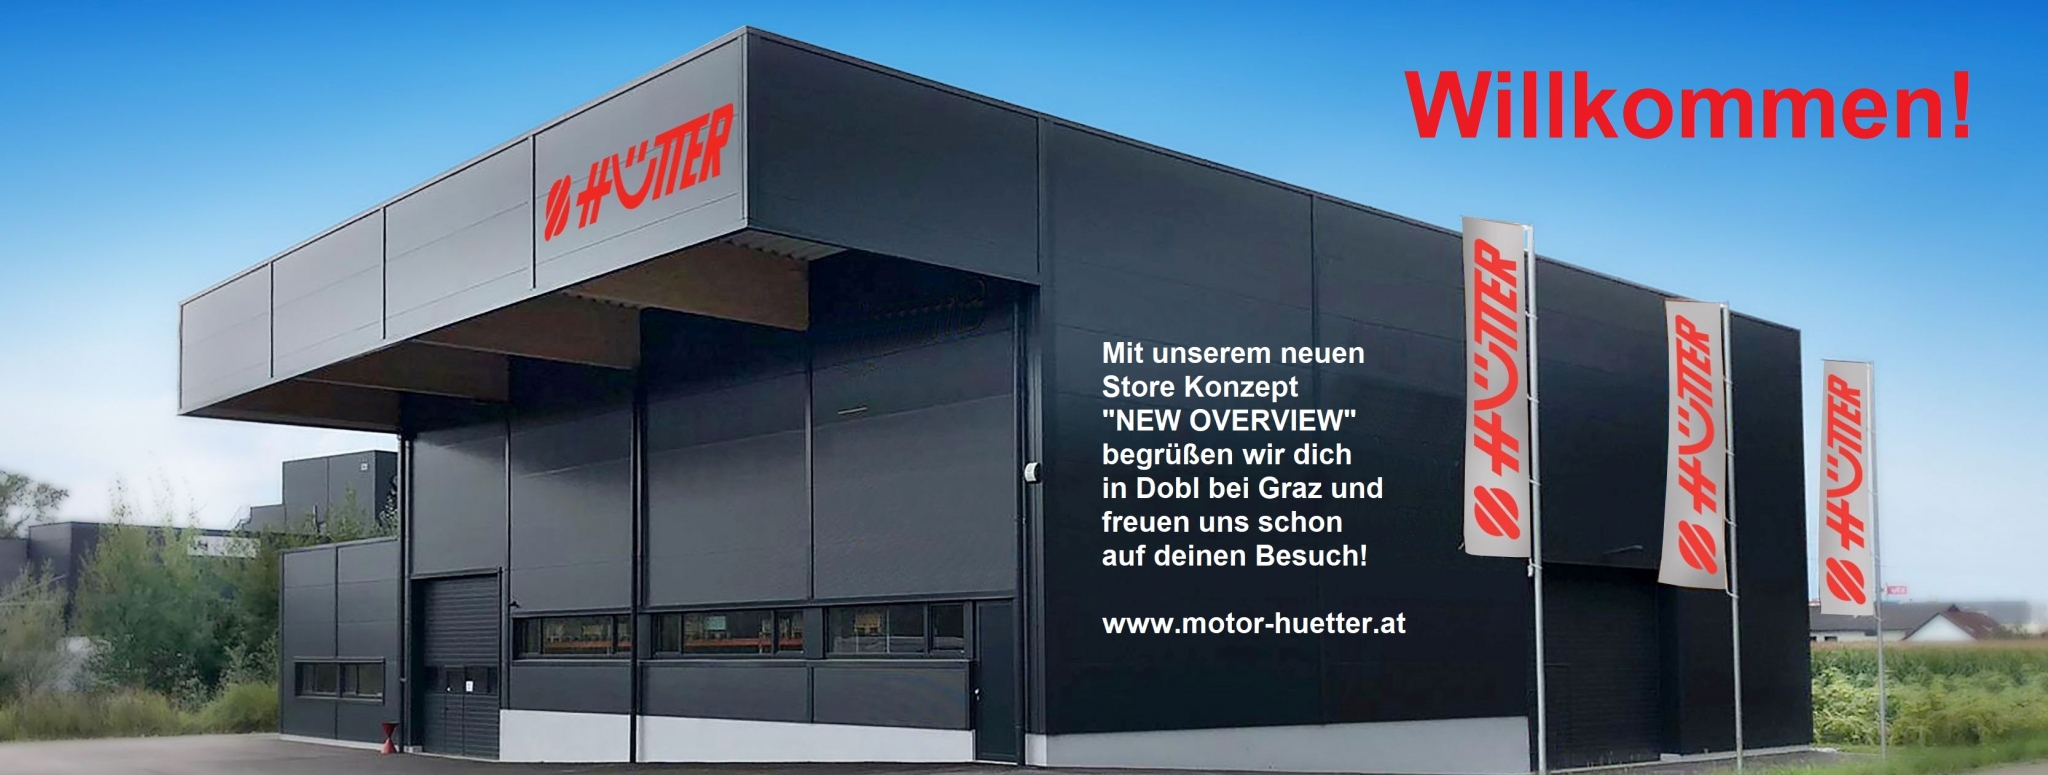 Motor Hütter - neuer Standort